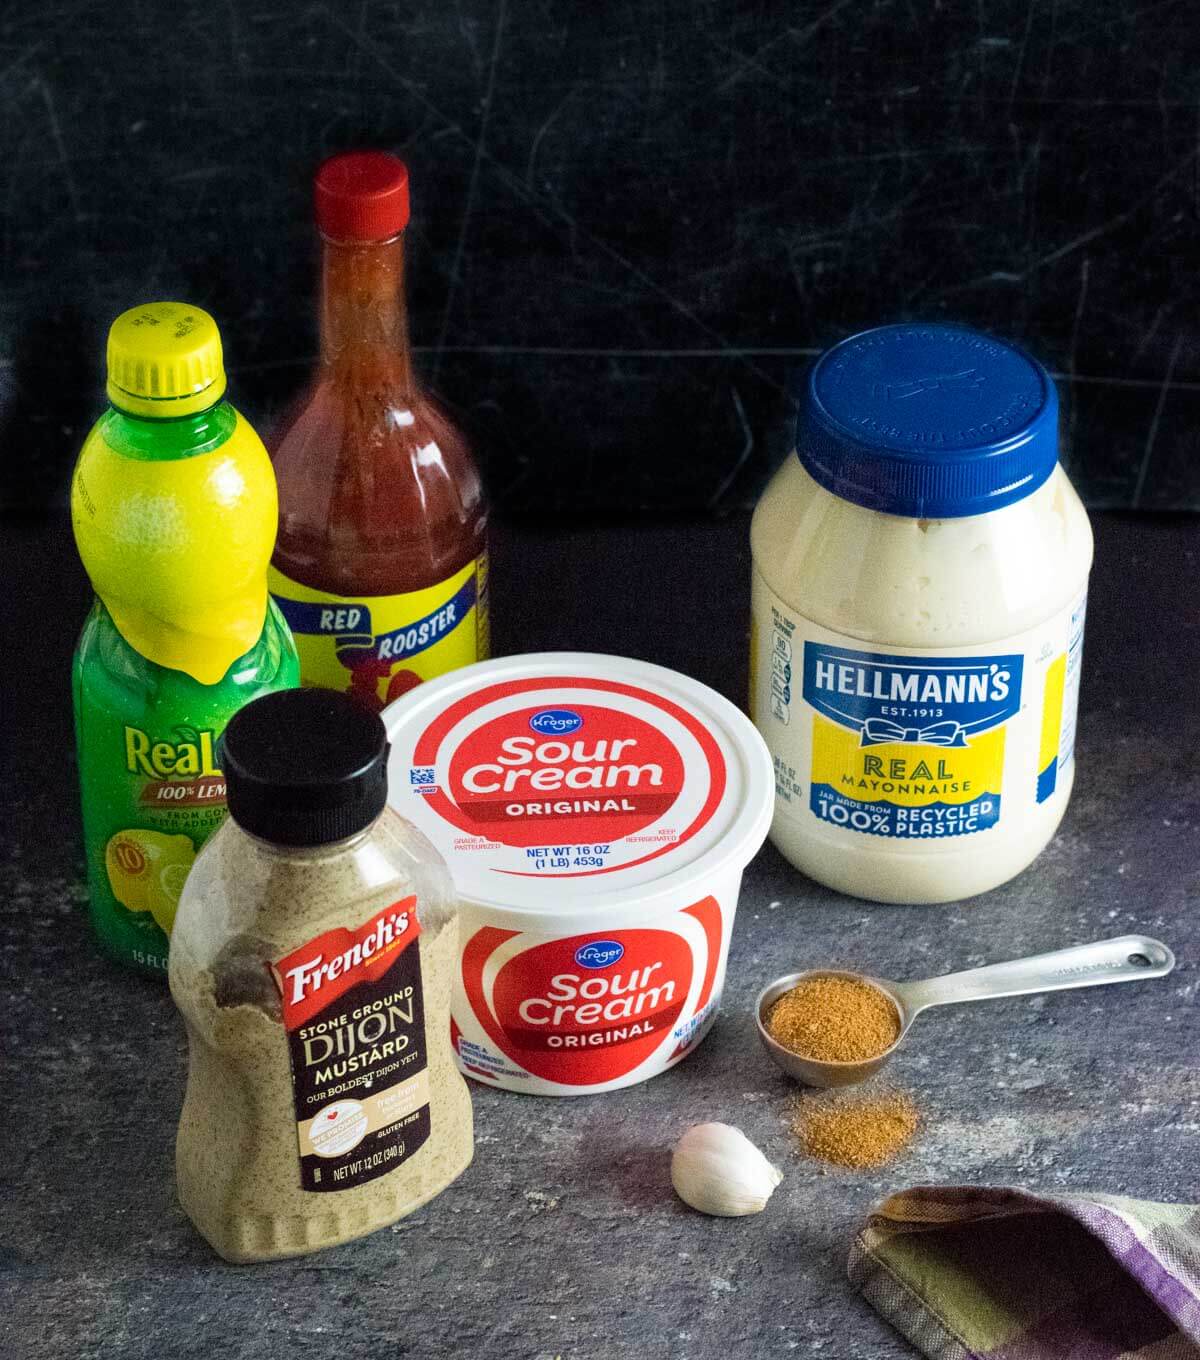 Showing ingredients for Cajun dipping sauce recipe.